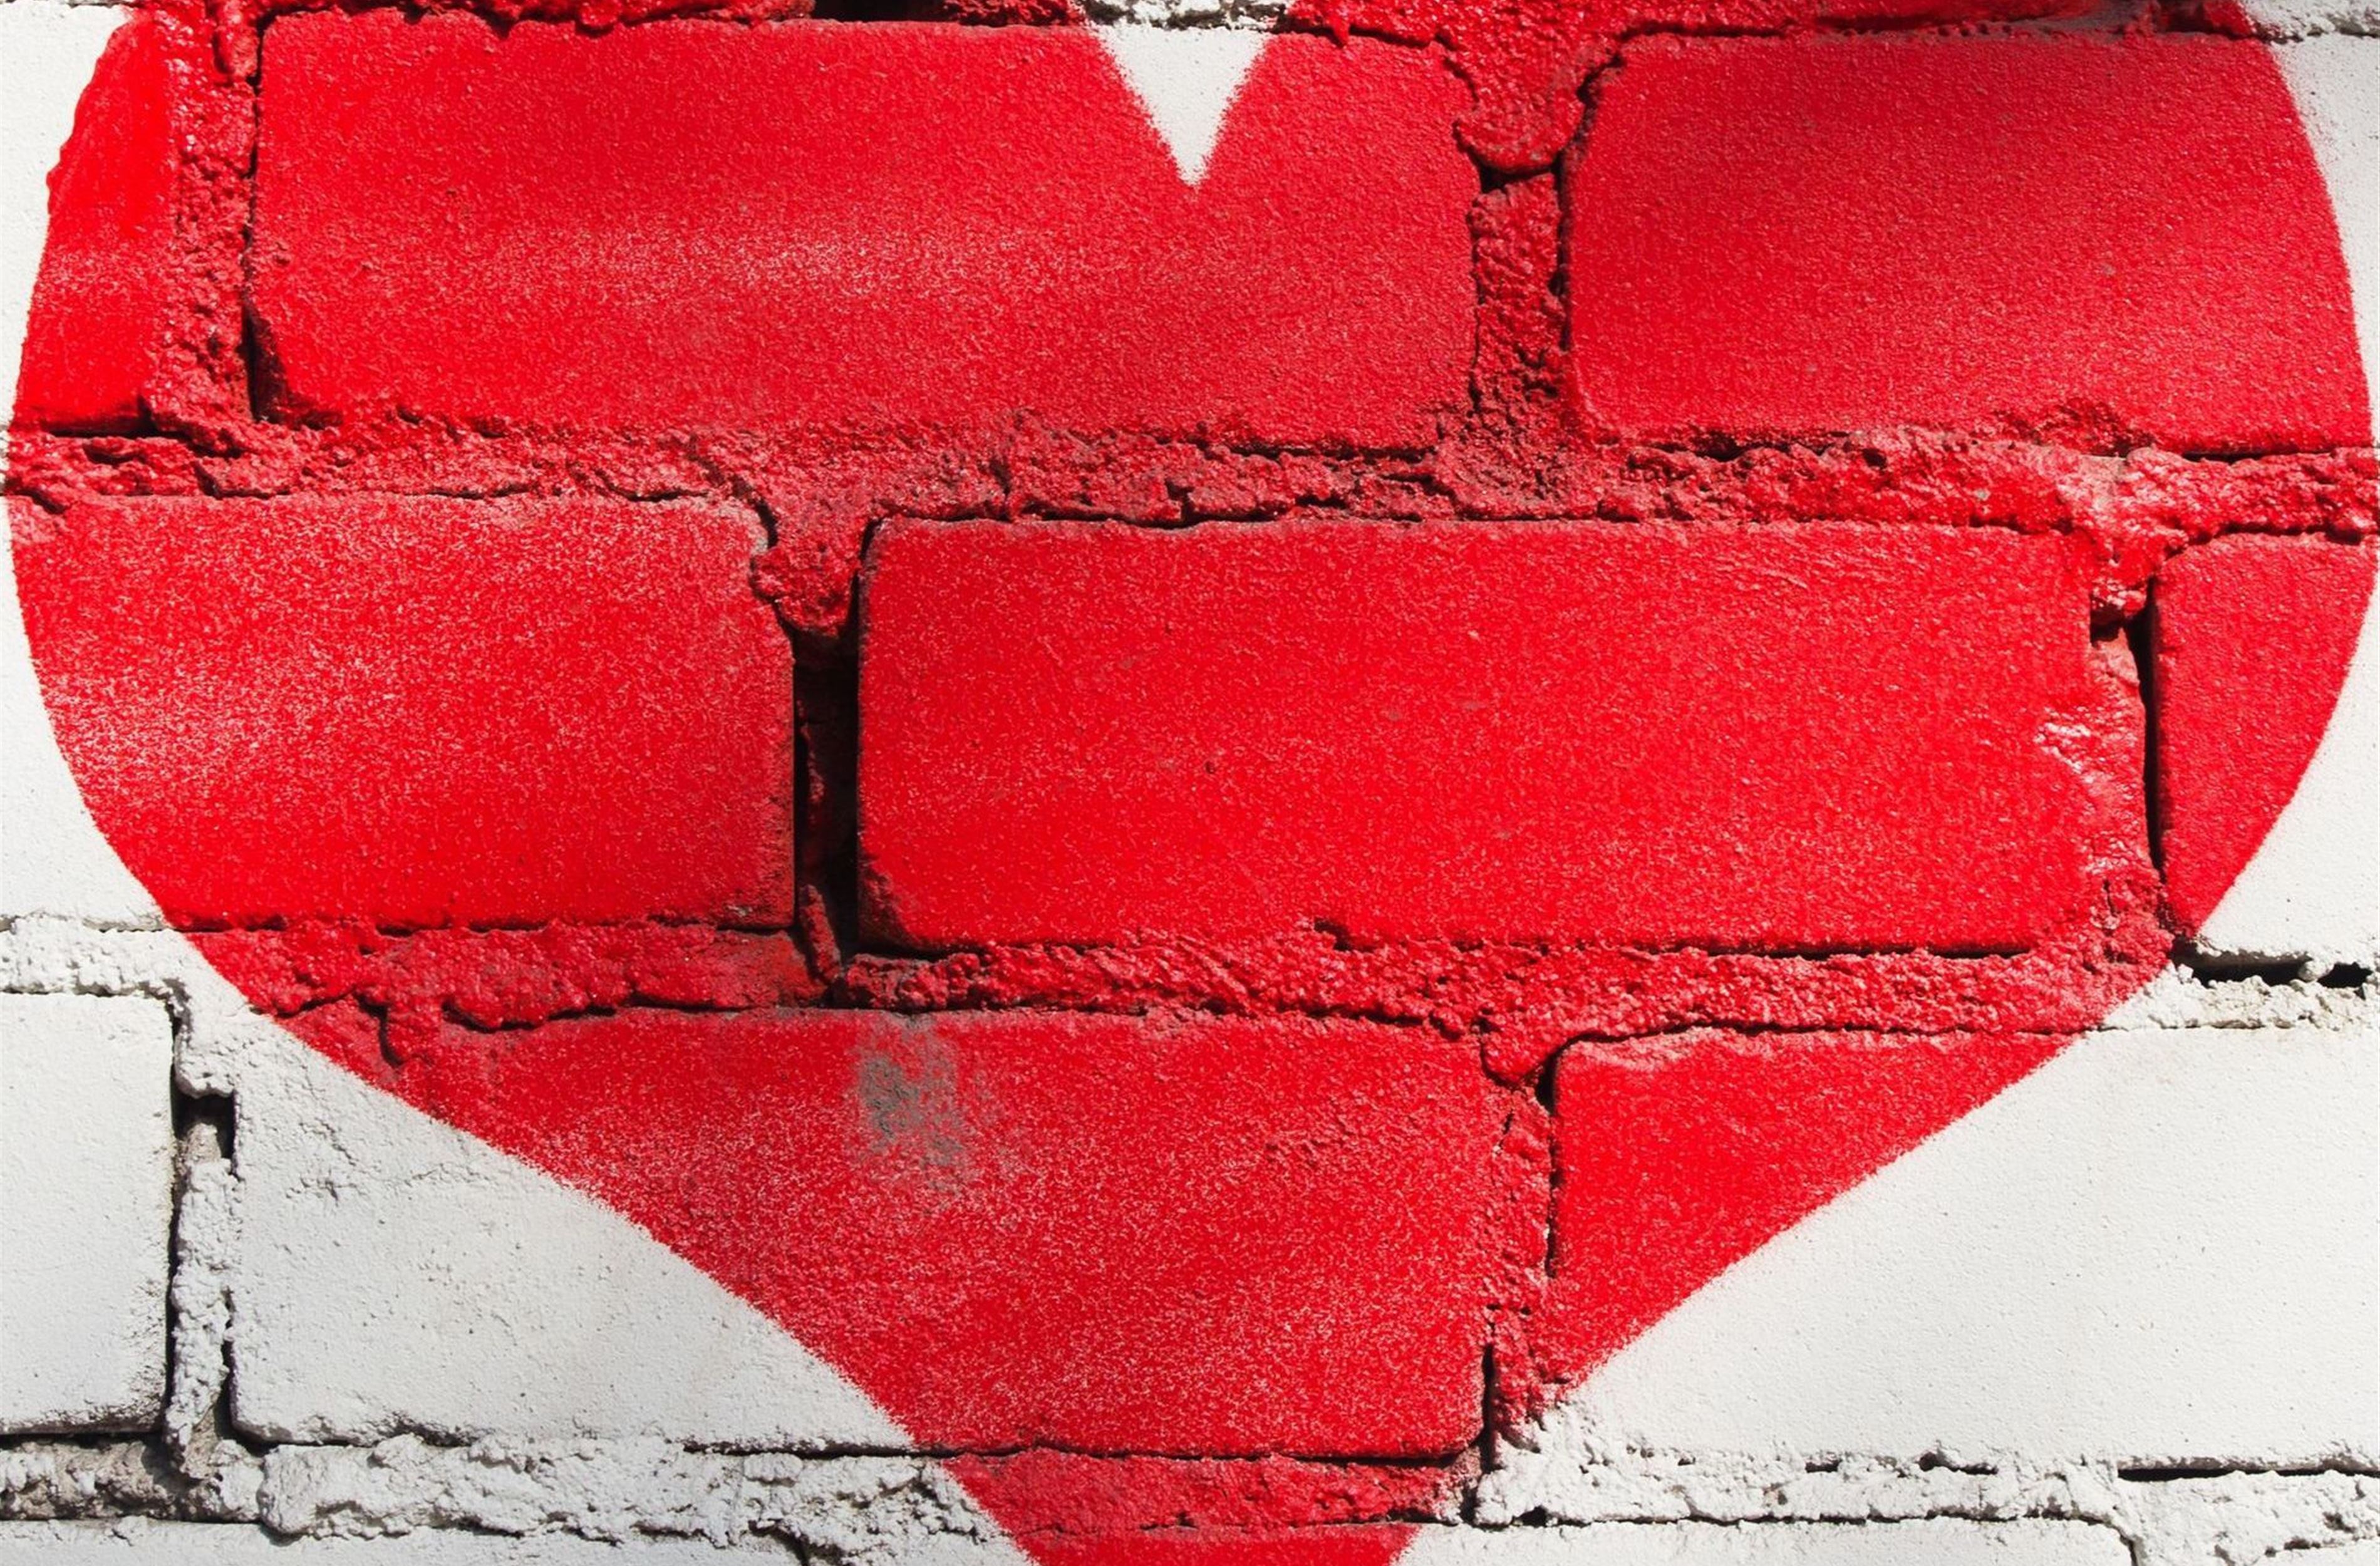 Red Heart On Brick Wall iPad Air wallpaper 